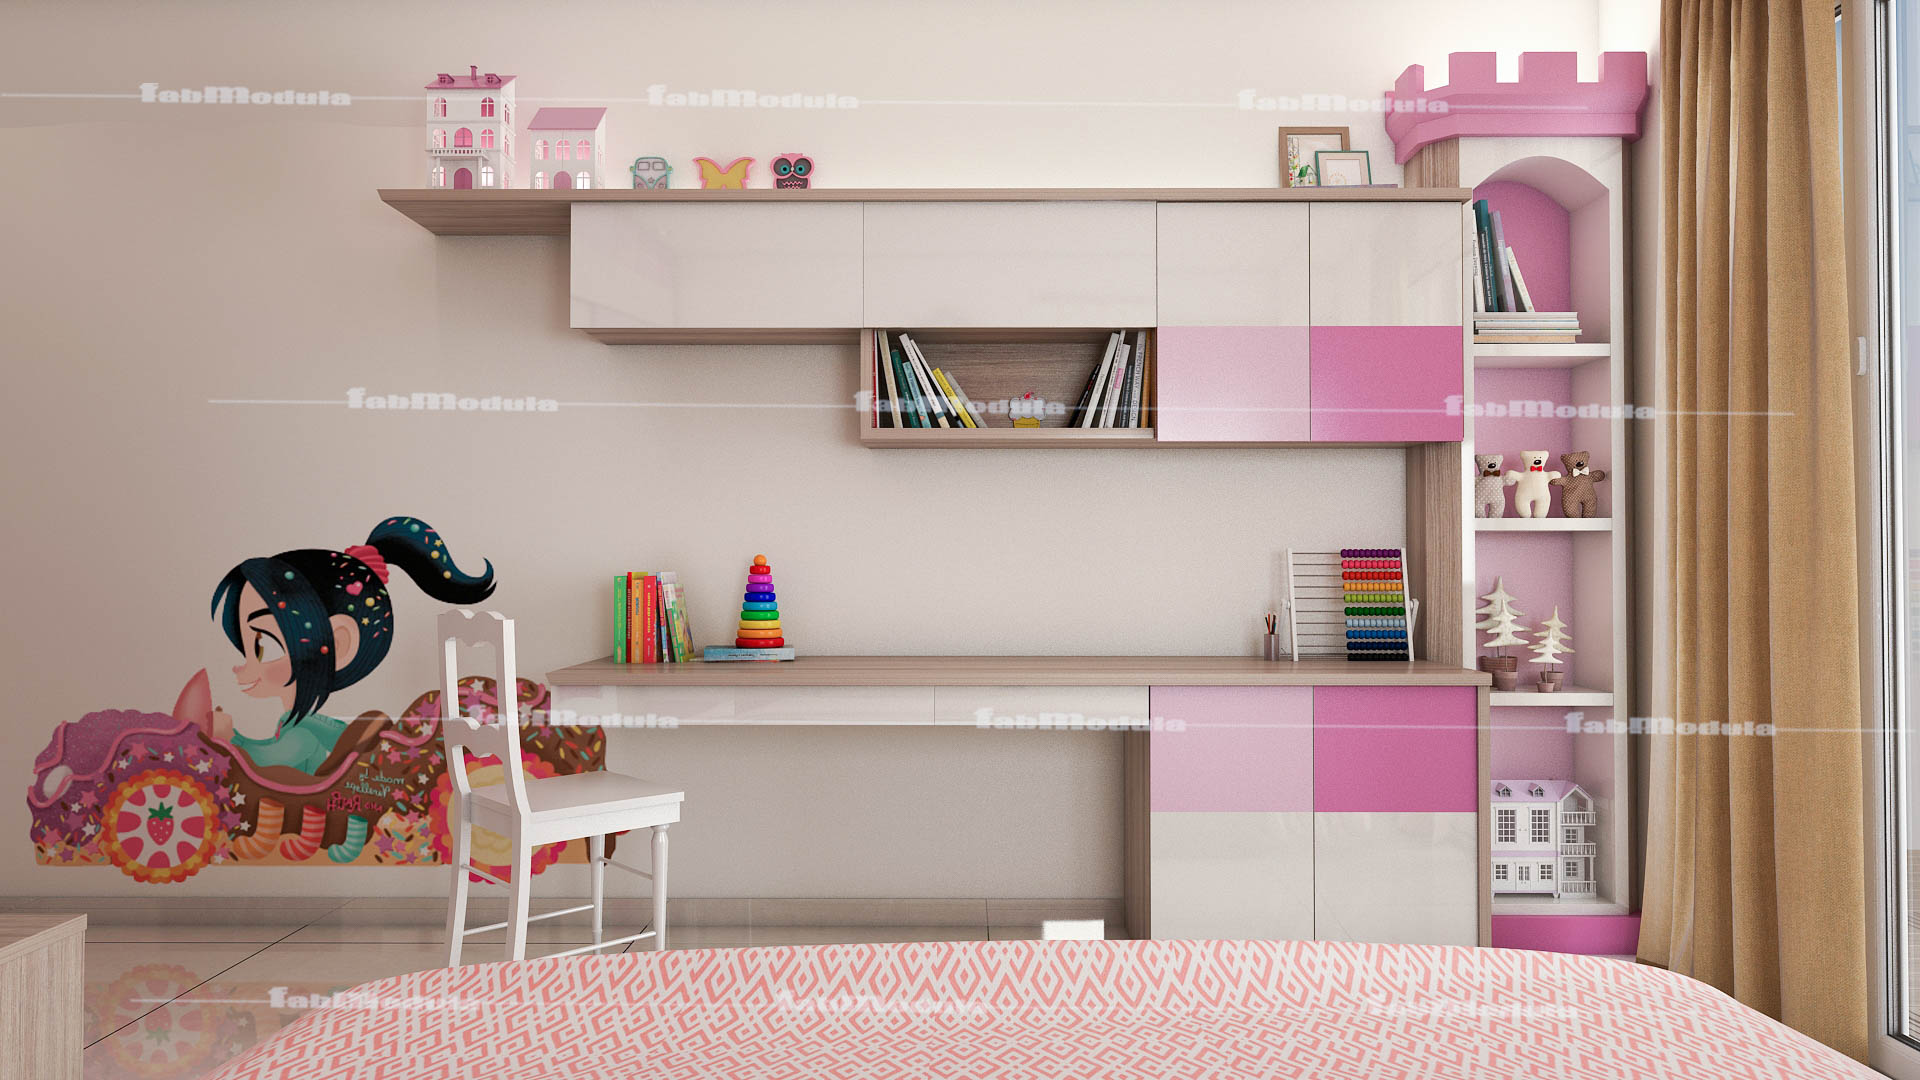 FabModula child inspiring study room design